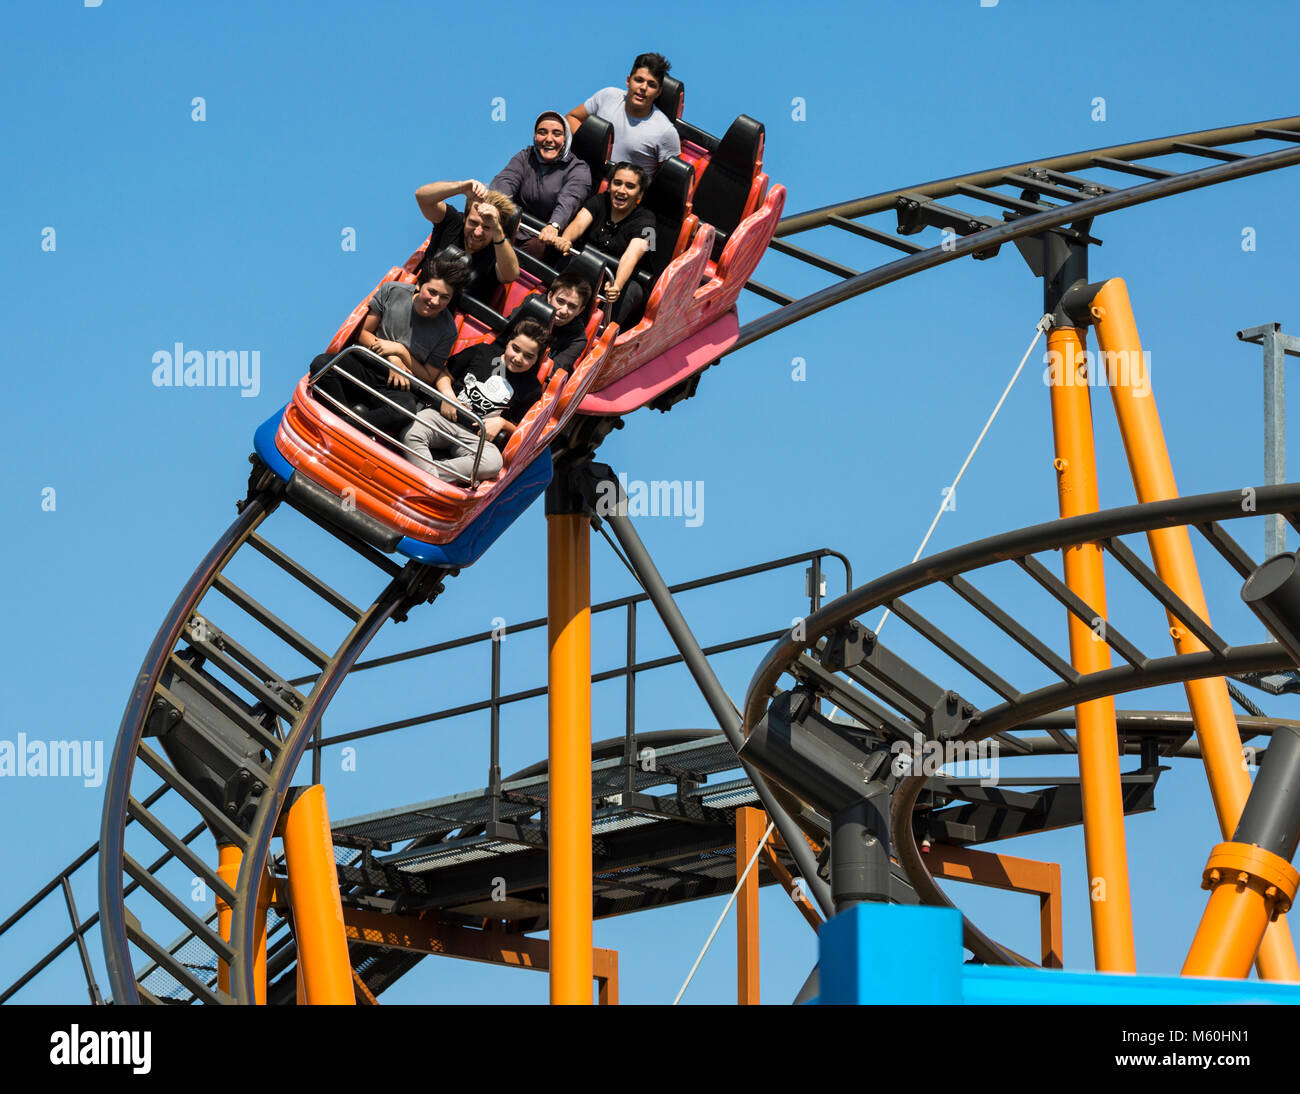 Rollercoaster ride, Prater amusement park, Leopoldstadt, Vienna, Austria. Stock Photo